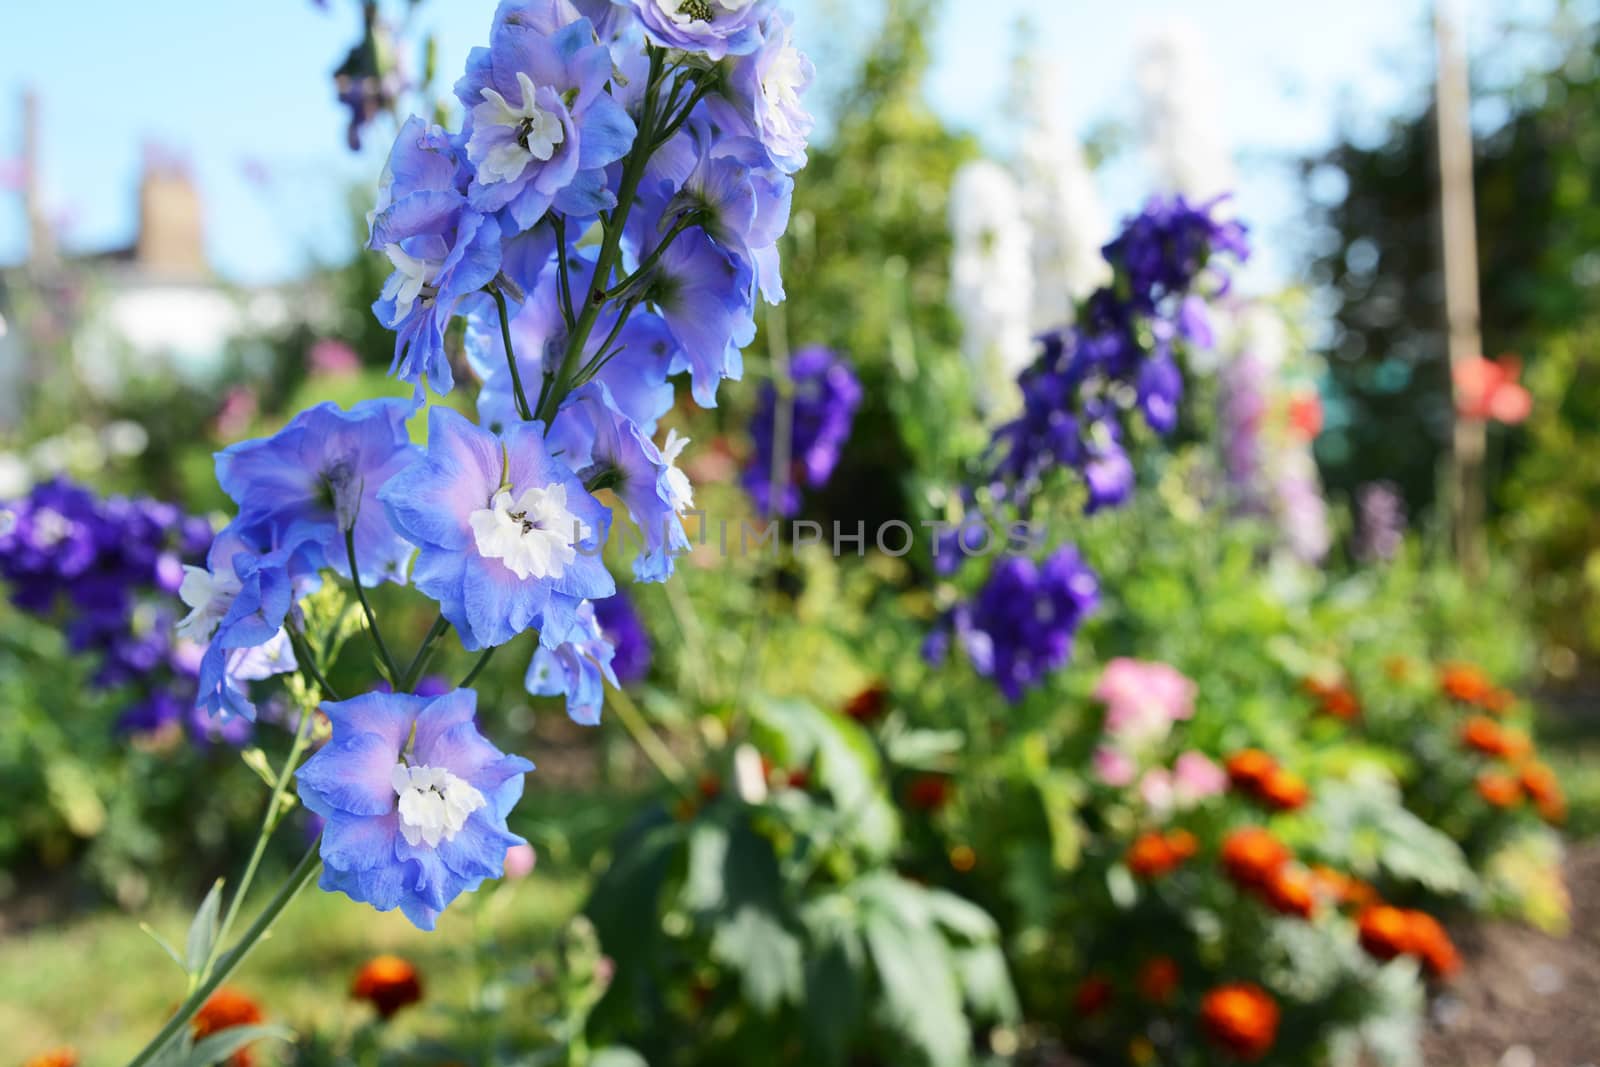 Light blue delphinium flower spike in selective focus against colourful flower garden